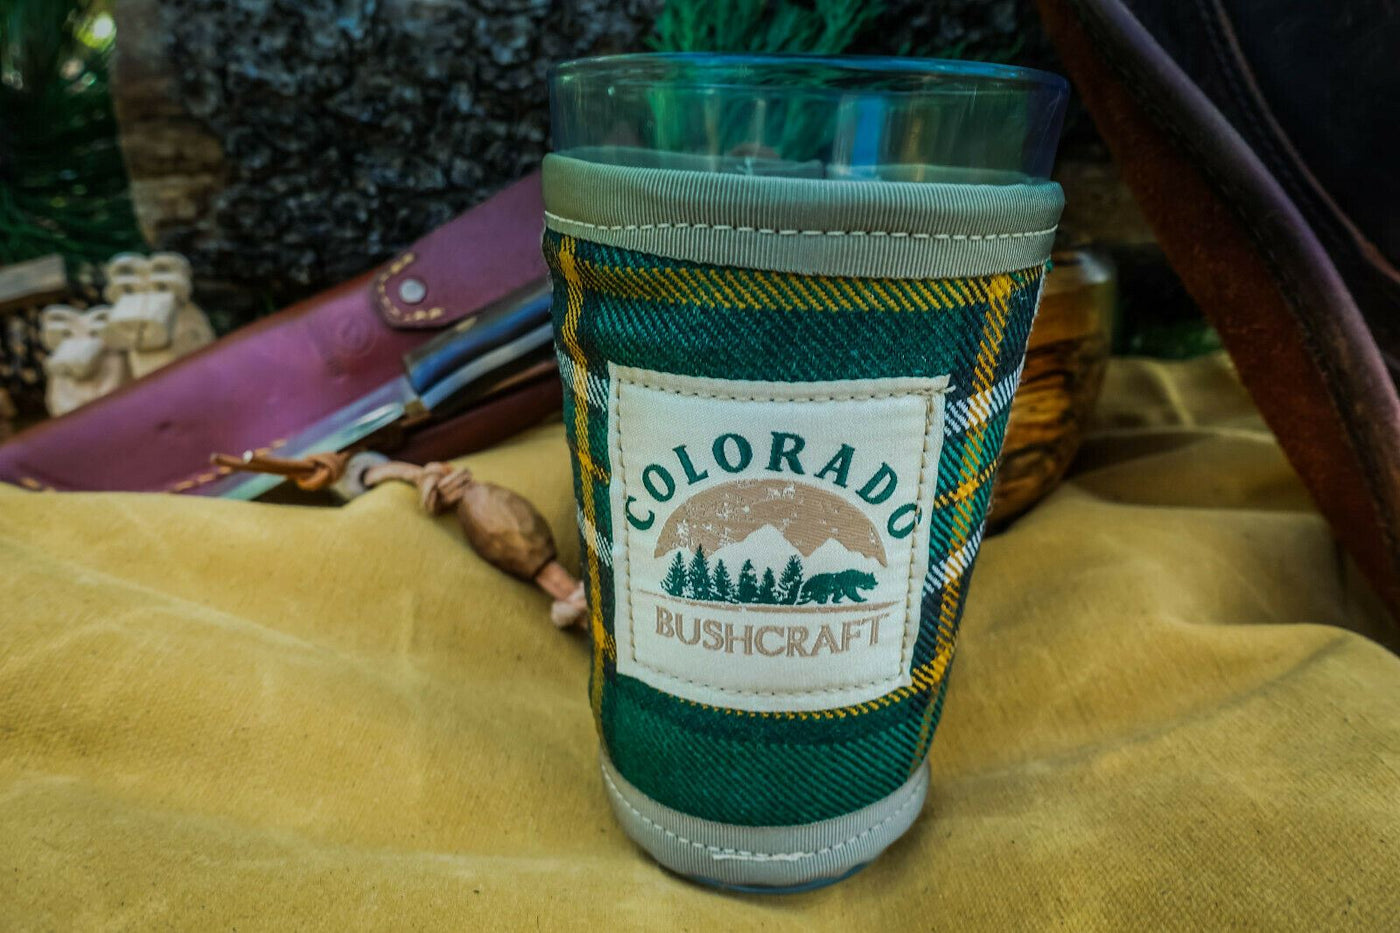 Bushcraft Scottish Tartan Pint Glass Beer Cooler Cozy / Sleeve Wool Insulated - Colorado Bushcraft